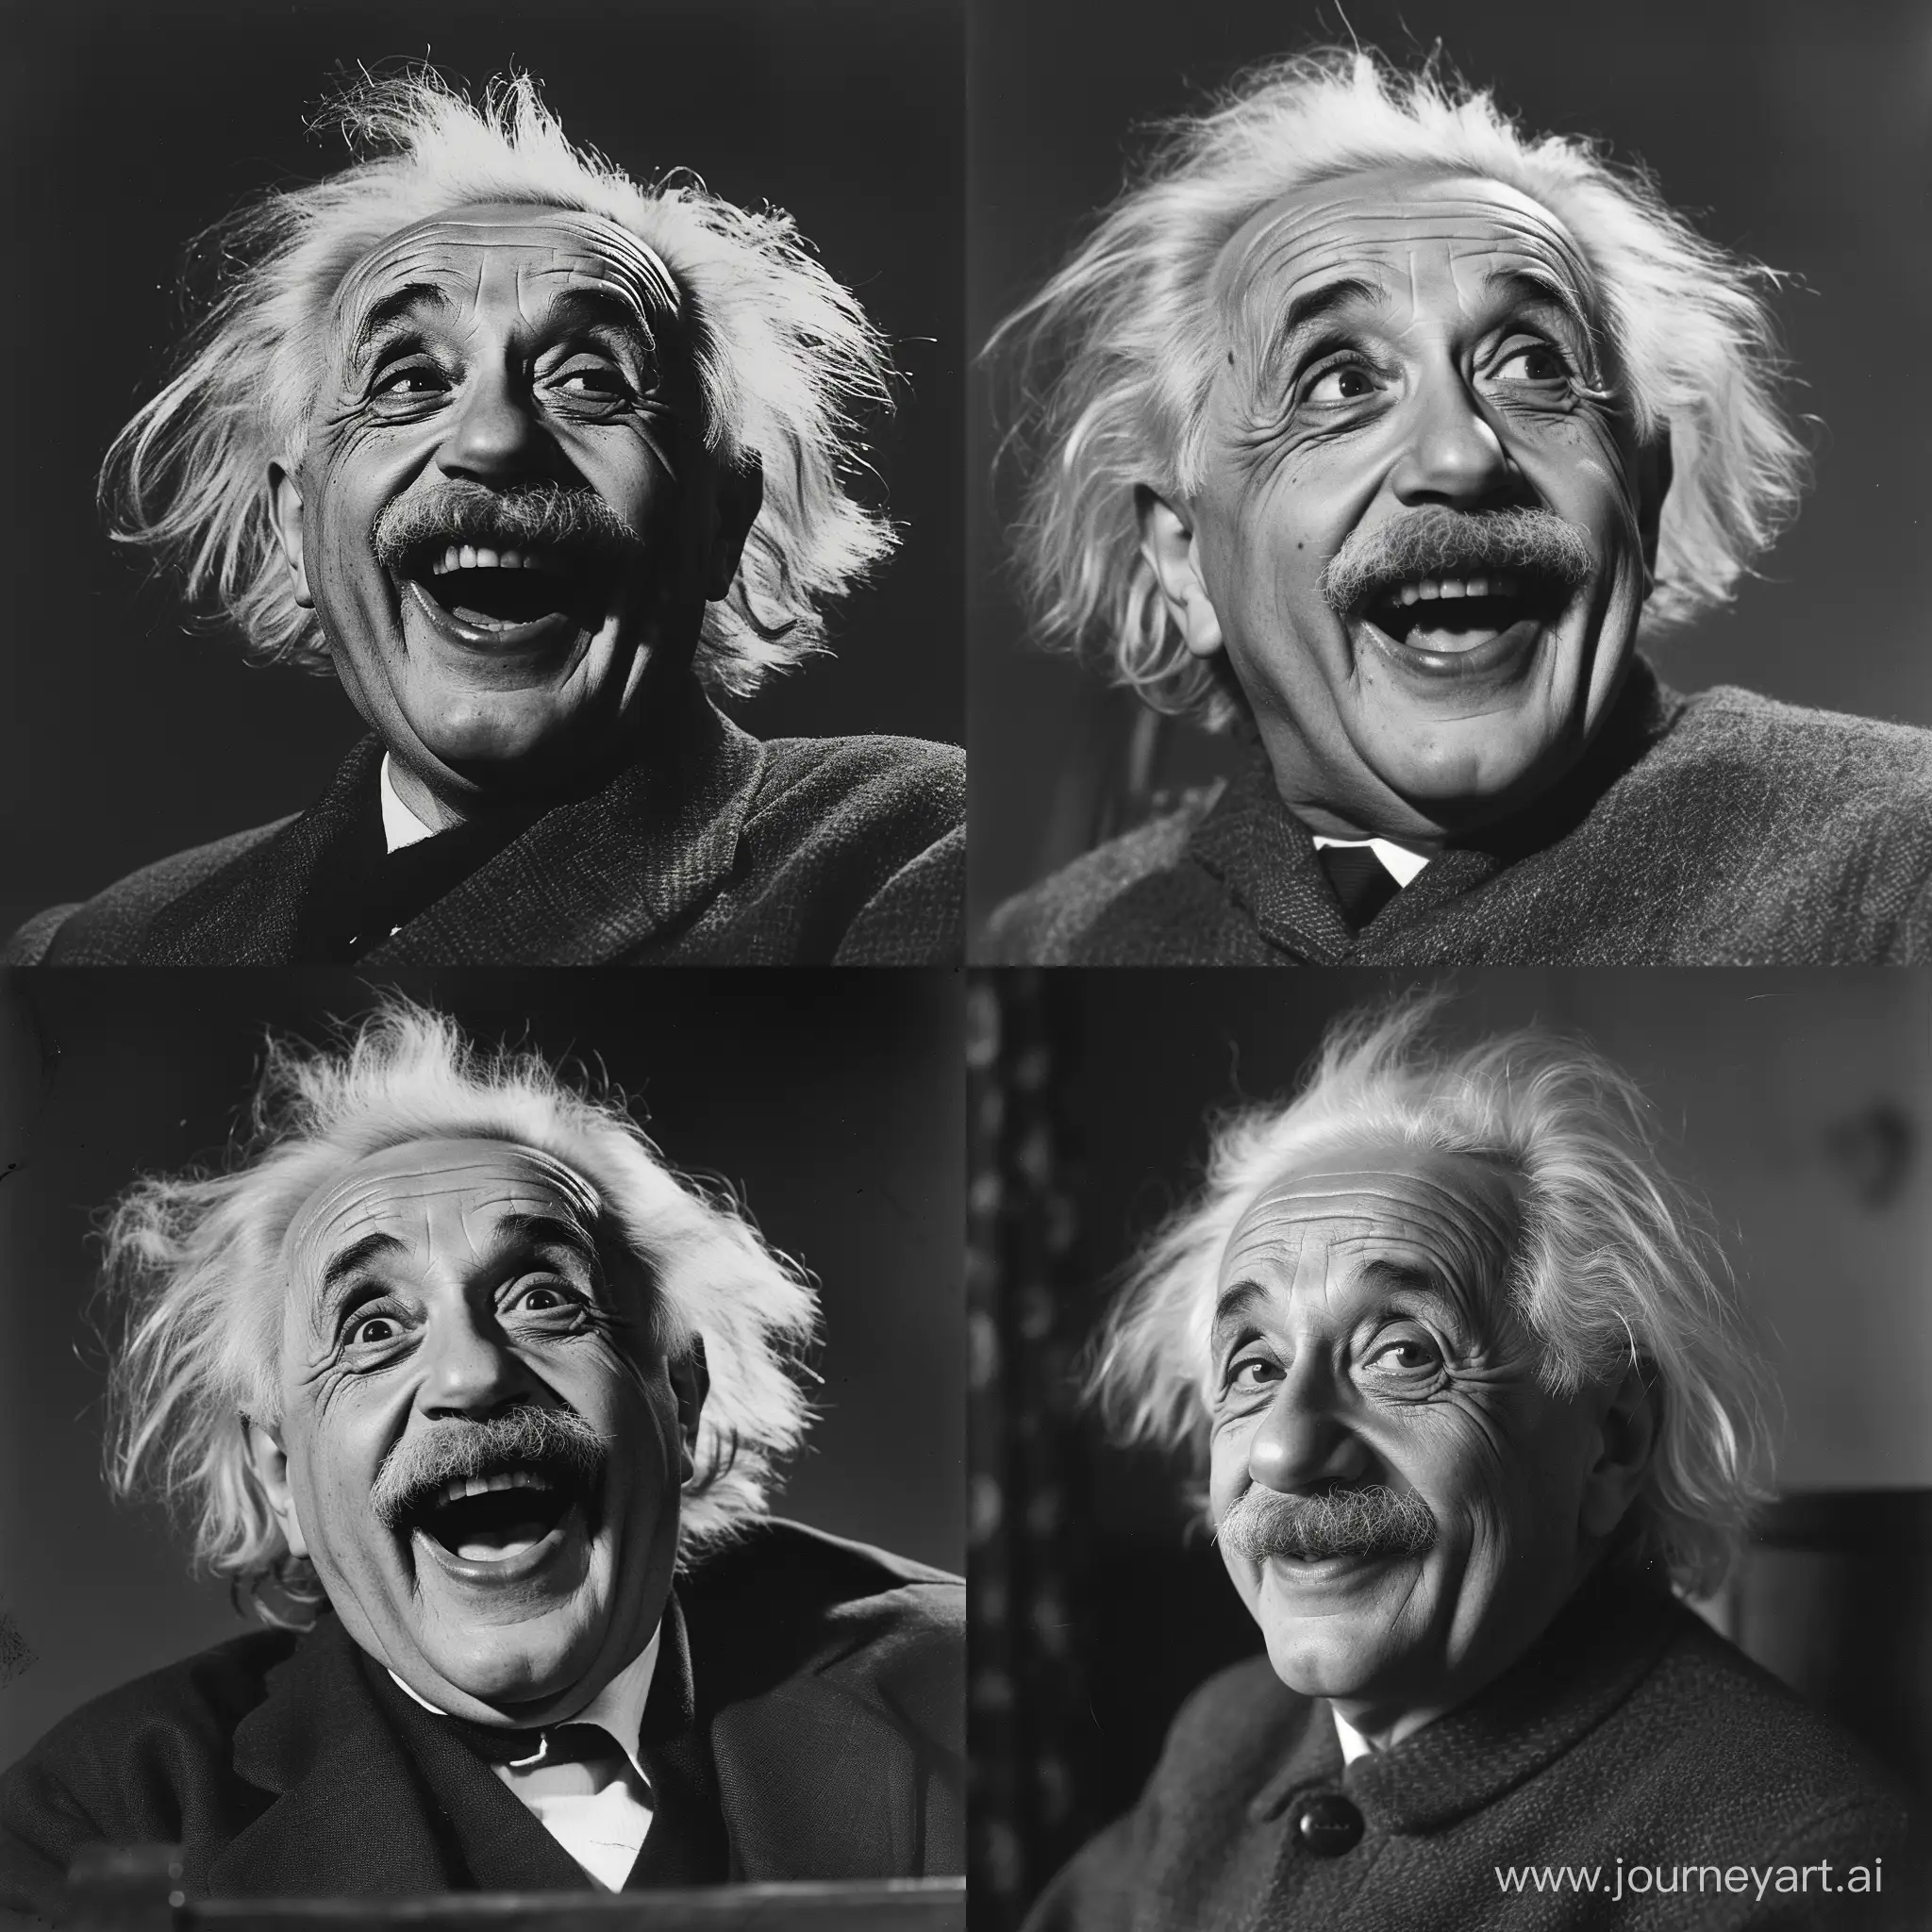 Albert-Einstein-Joking-Playful-Take-on-the-Theory-of-Relativity